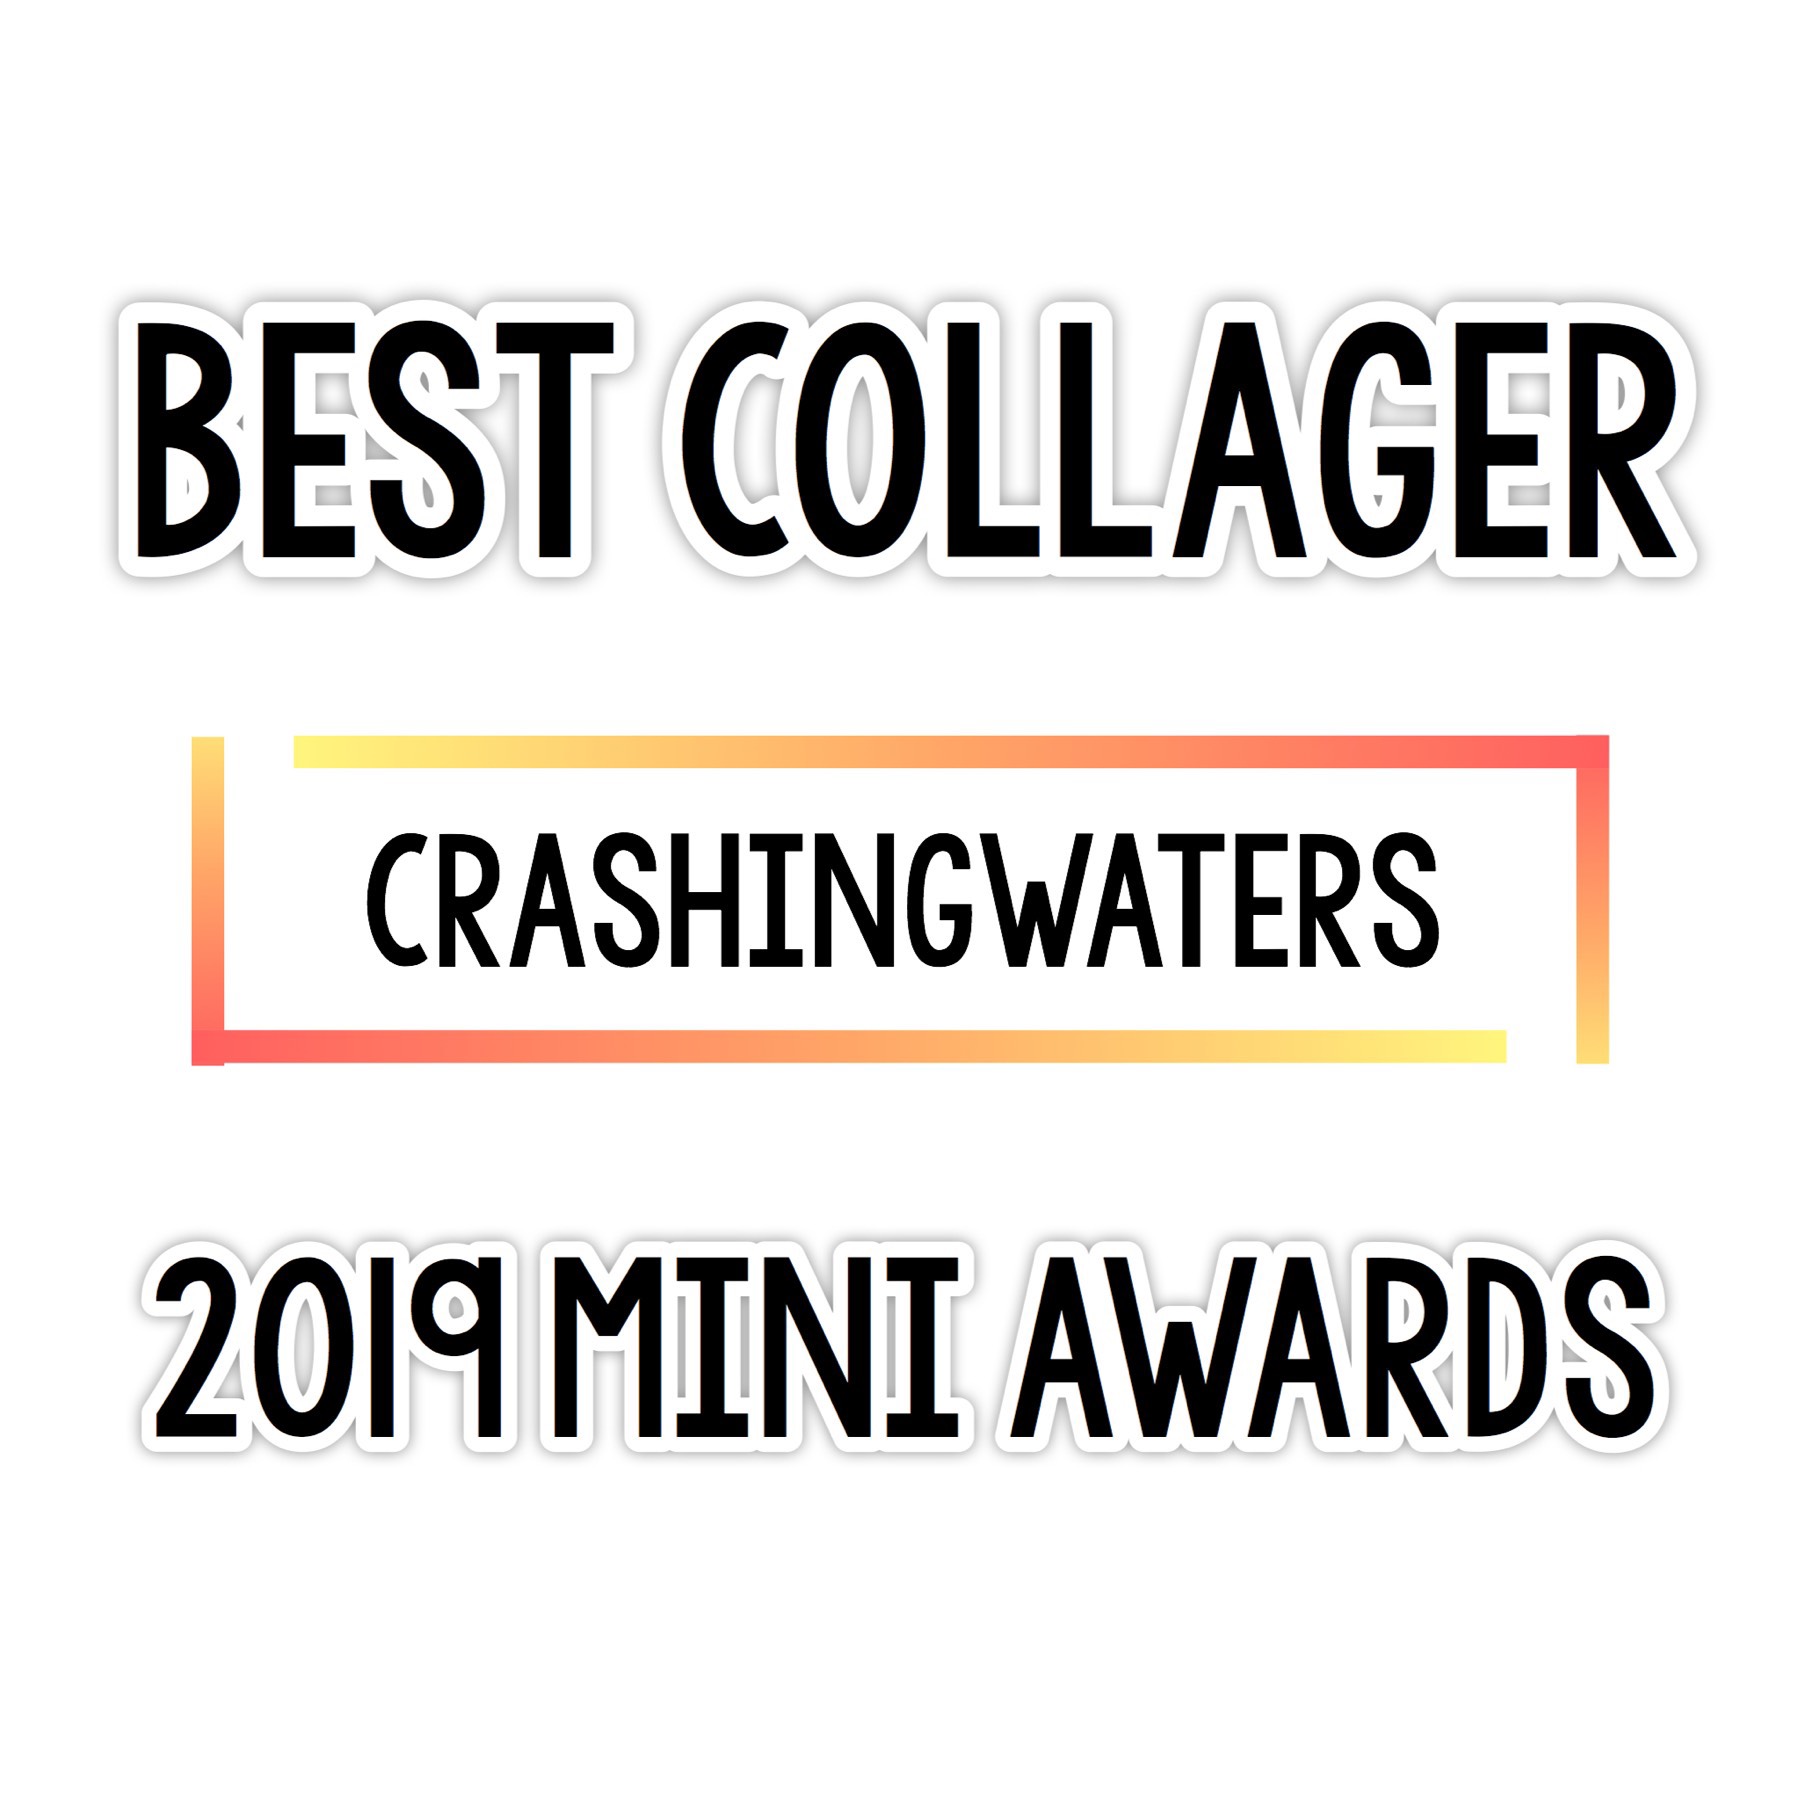 Congratulations CrashingWaters !